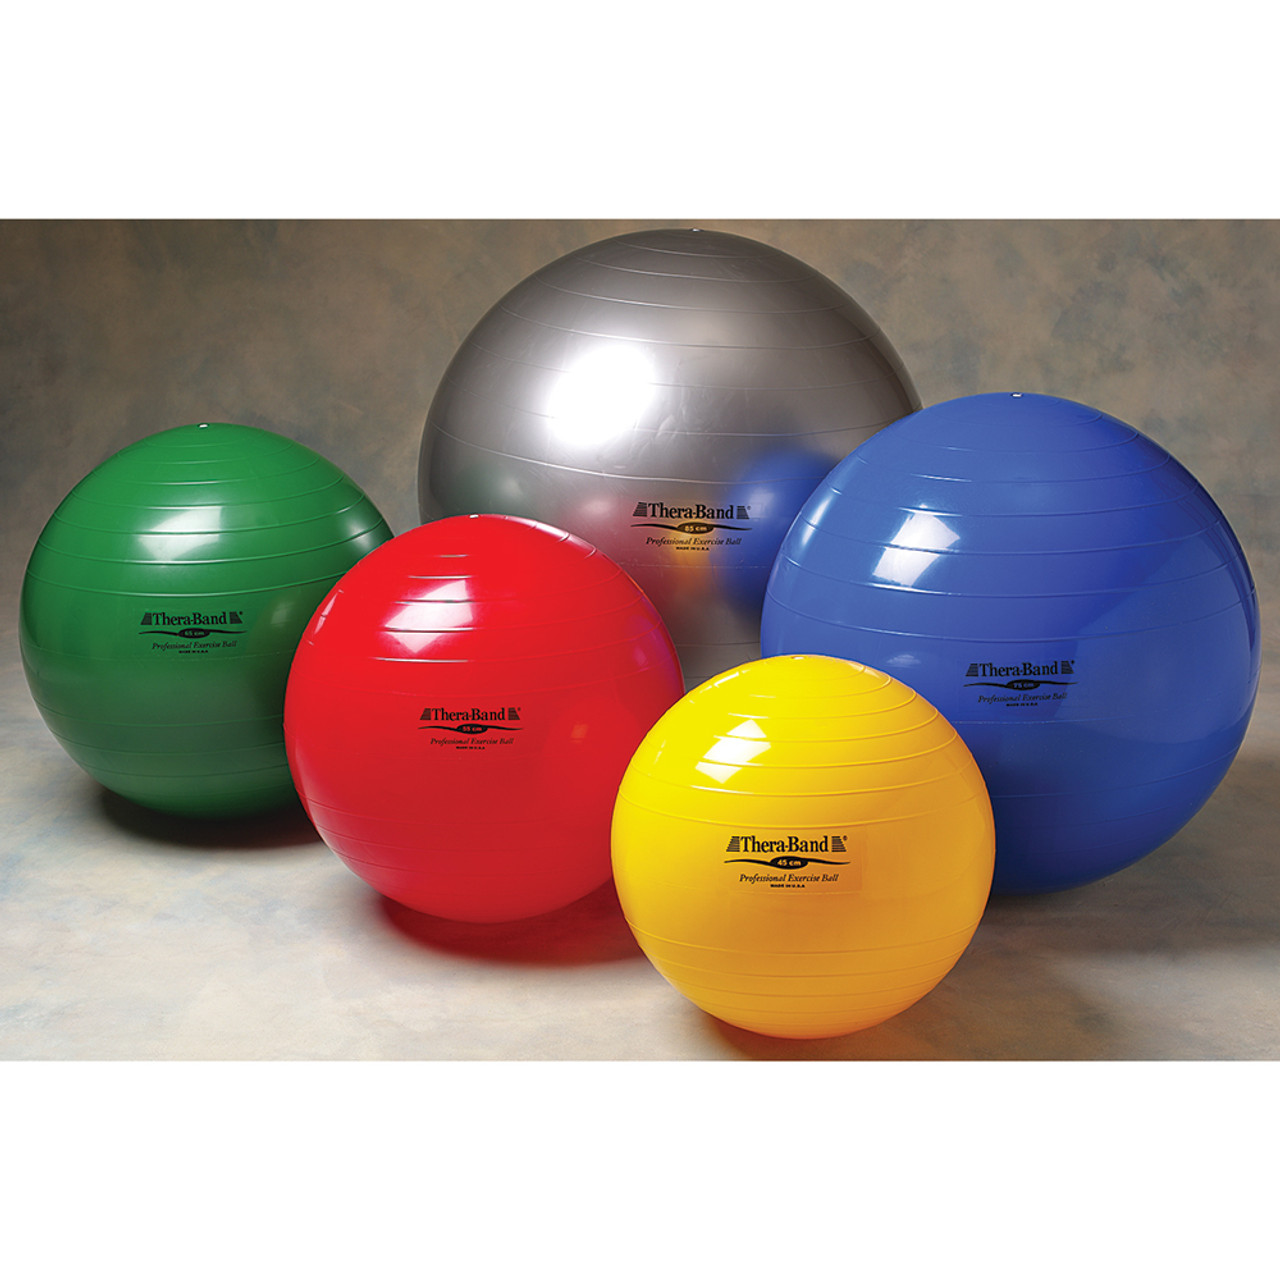 85cm exercise ball